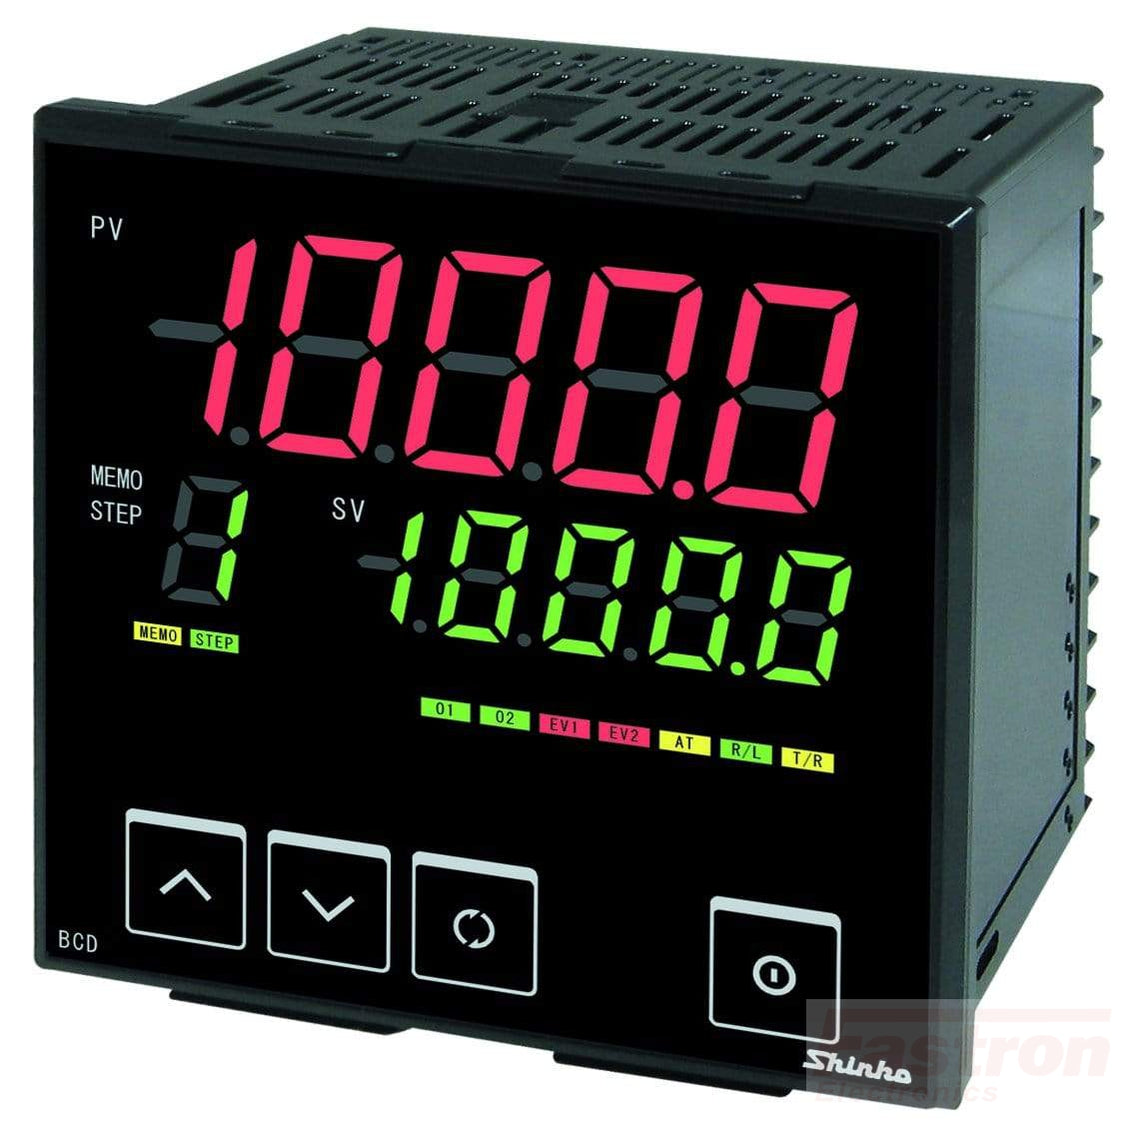 BCD2R1006 Temp Controller, 96x96mm, 24VAC/DC, SSR output, RS485 Comms